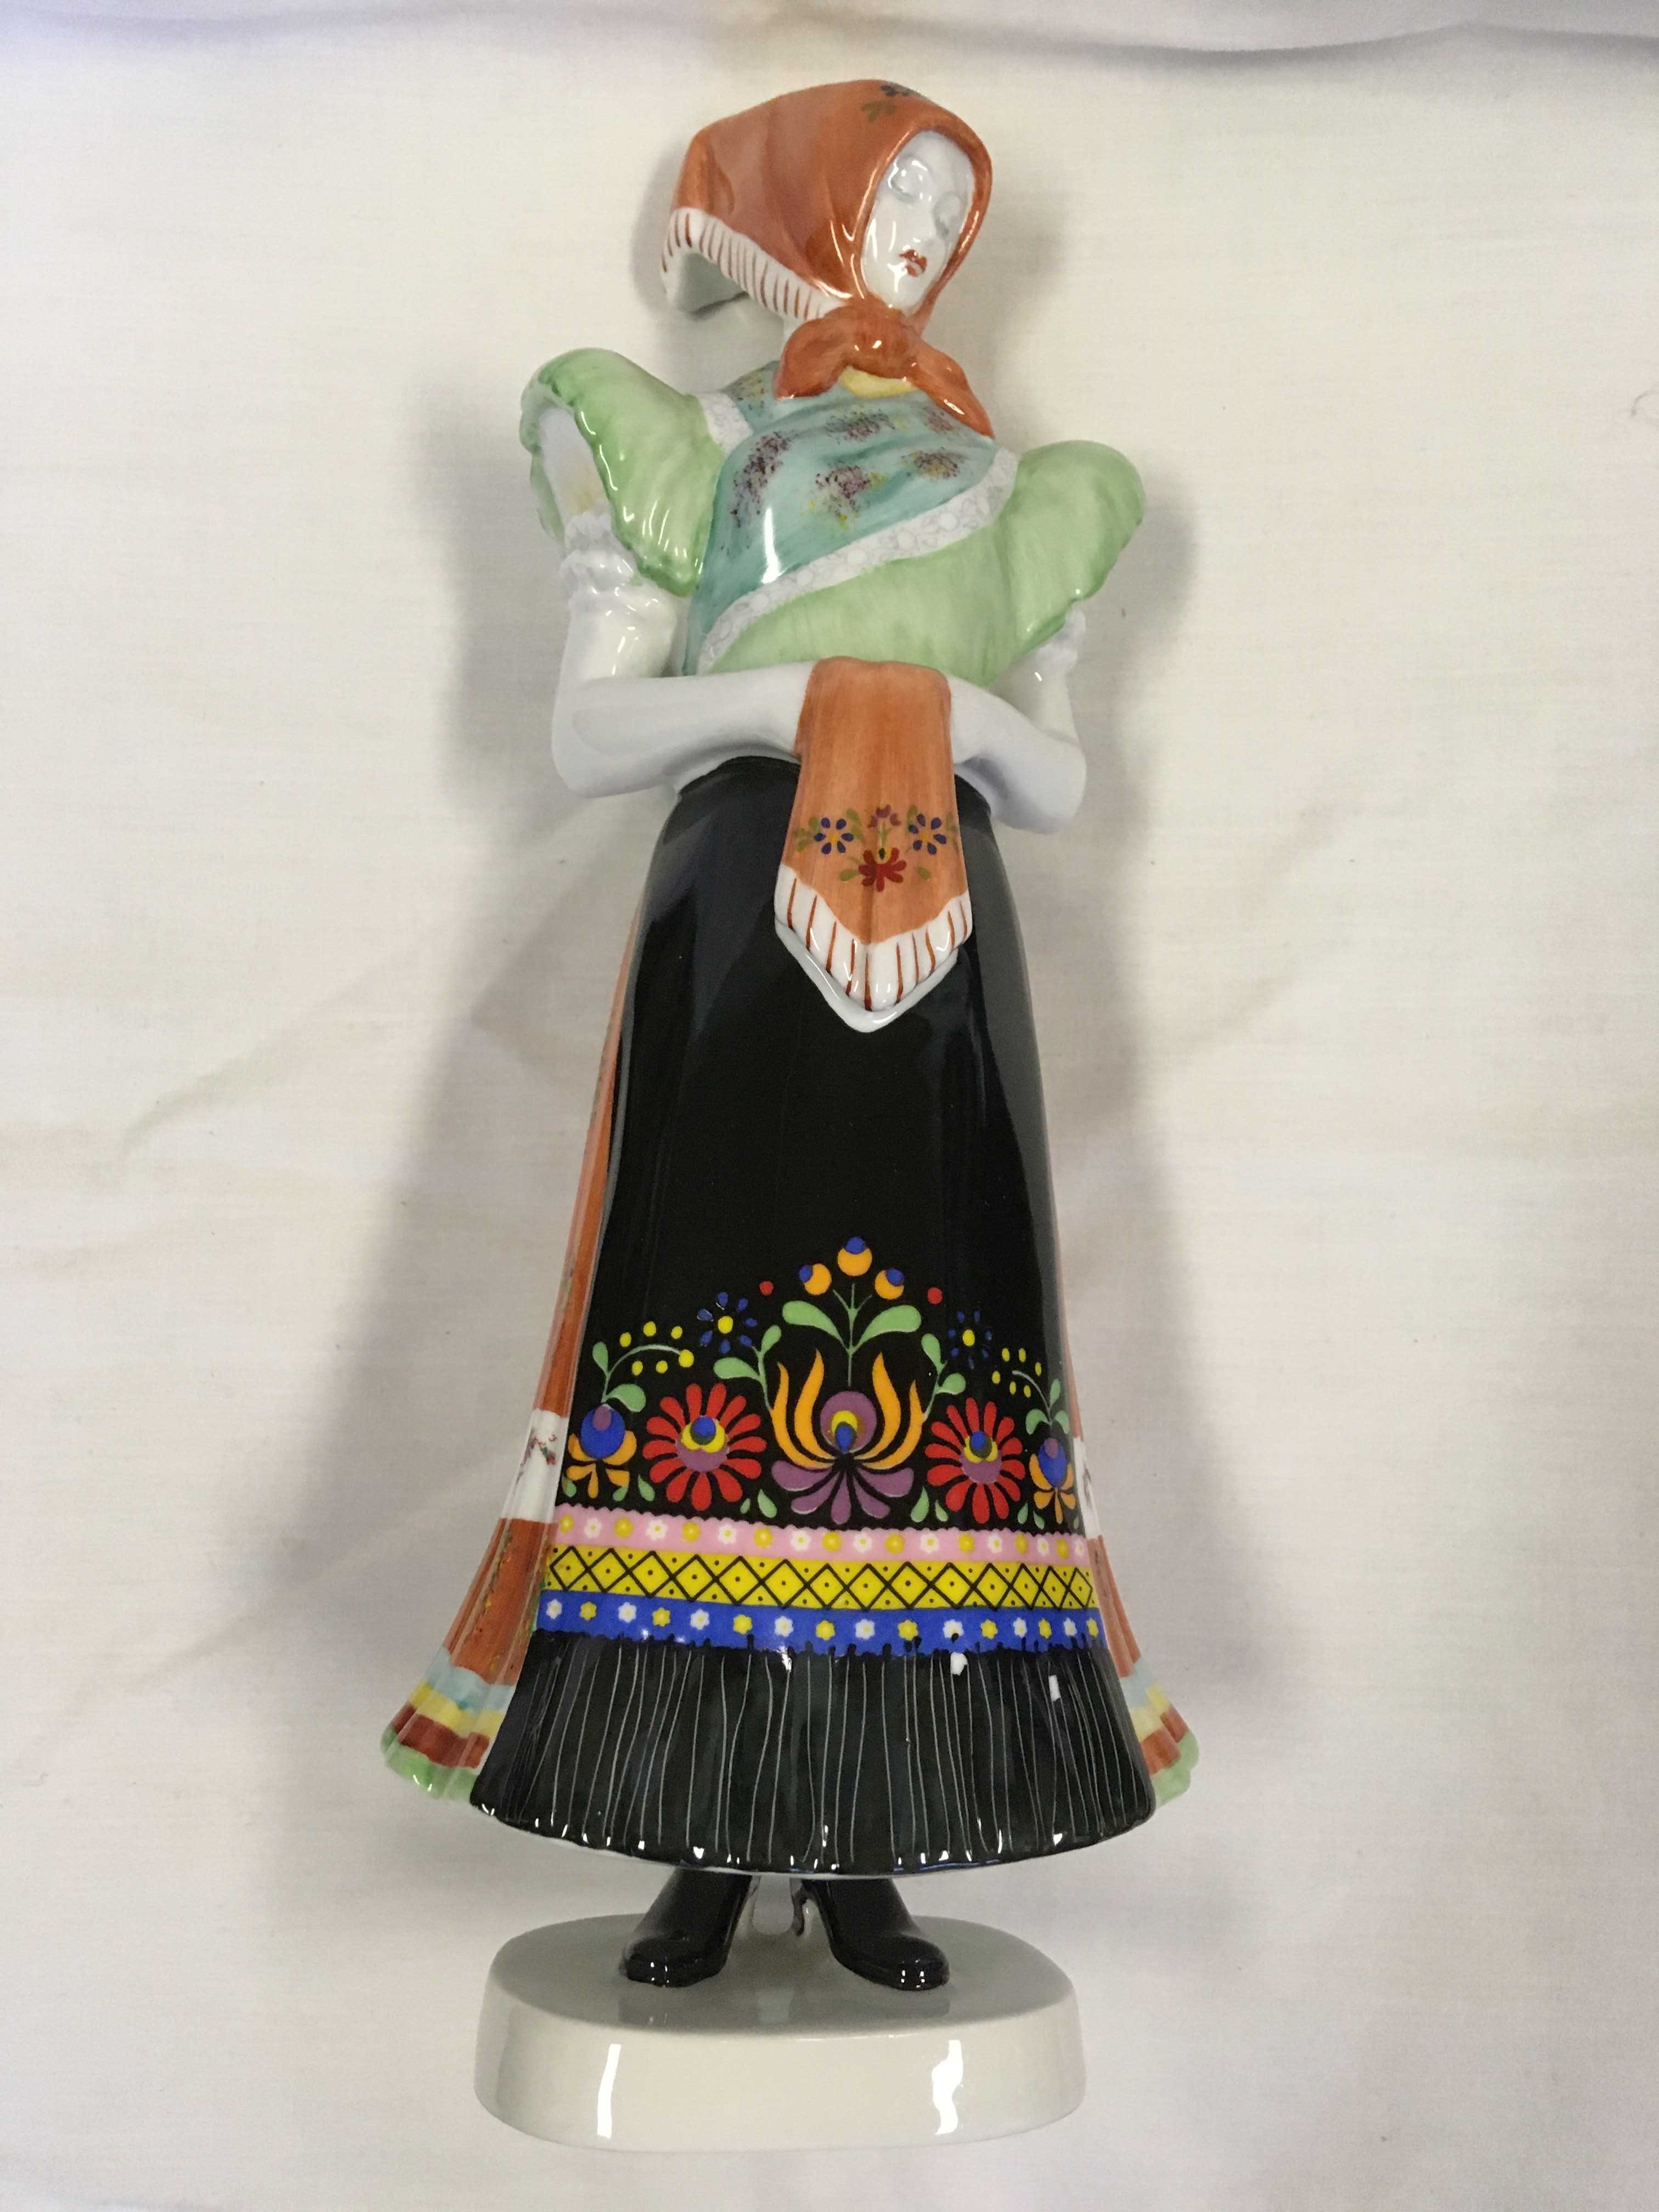 Traditional Austrian figurine